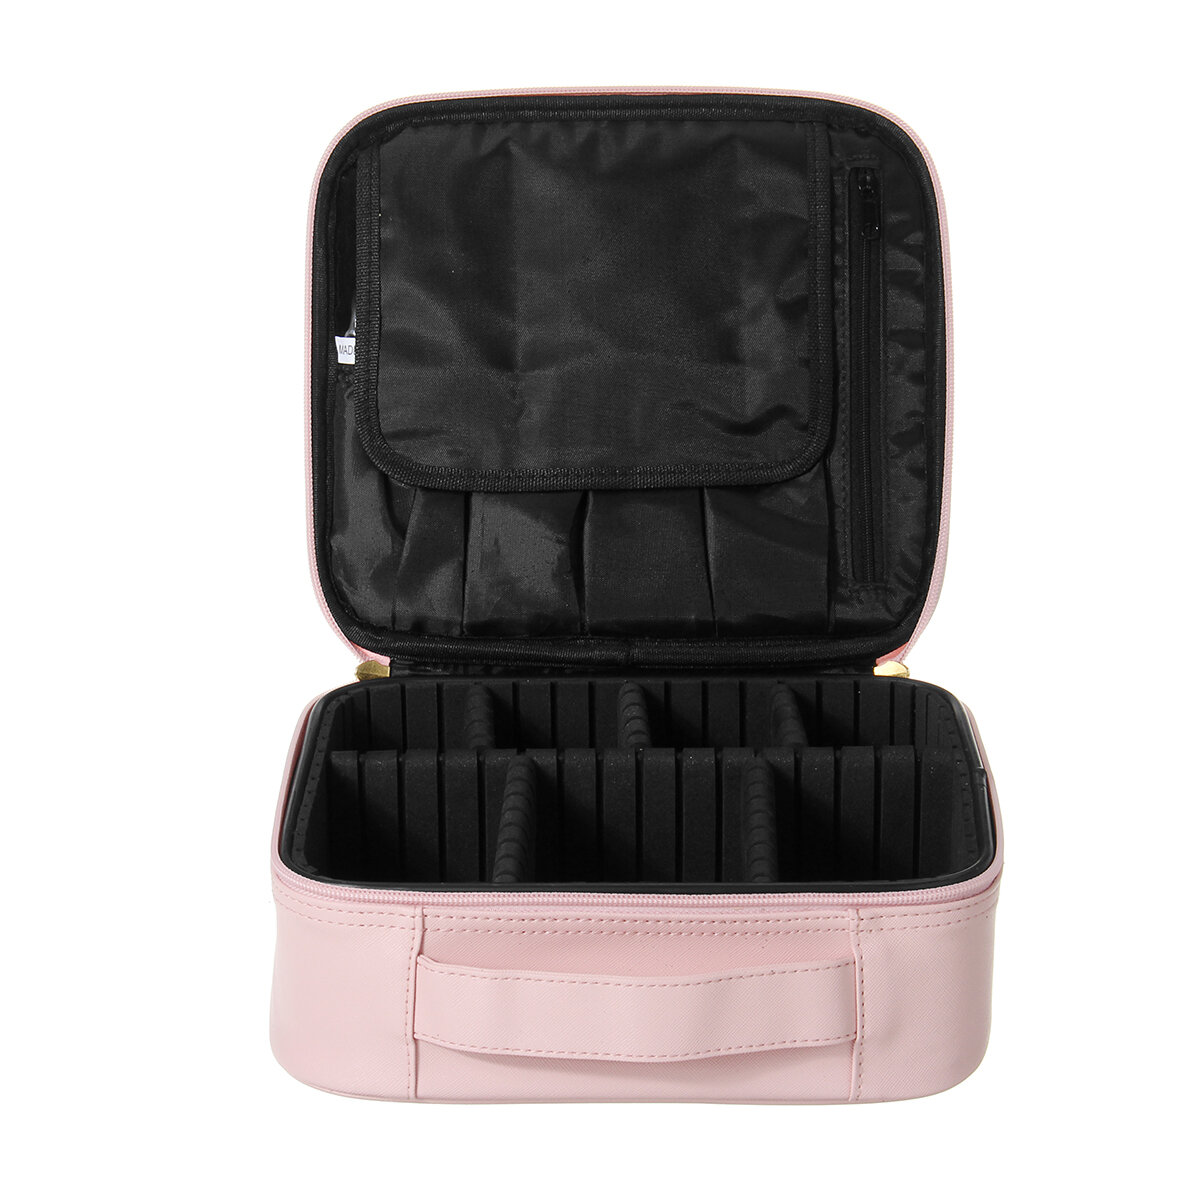 Waterproof Female Oxford Waterproof Upgraded Version Cosmetic Storage Case Beauty Make-up Brush Orga